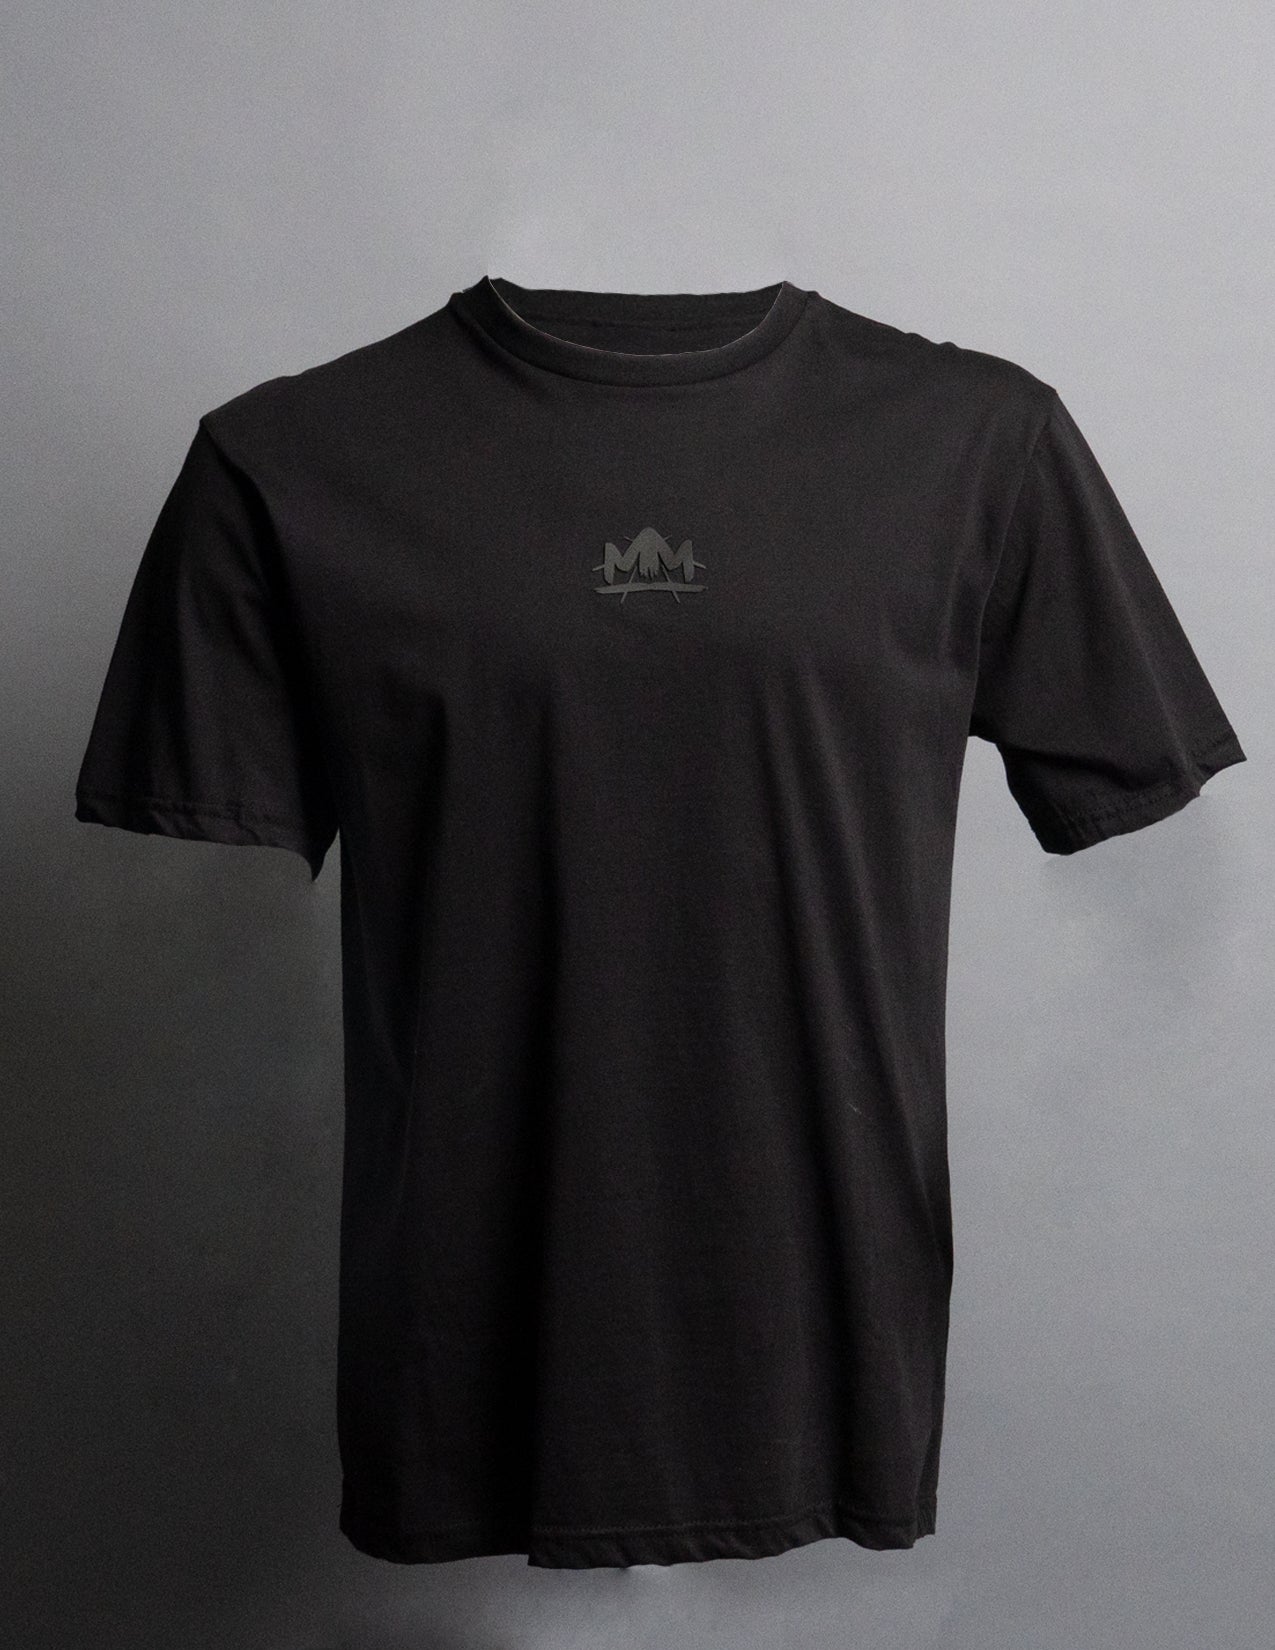 MCFLY Studio Shirt "Black"